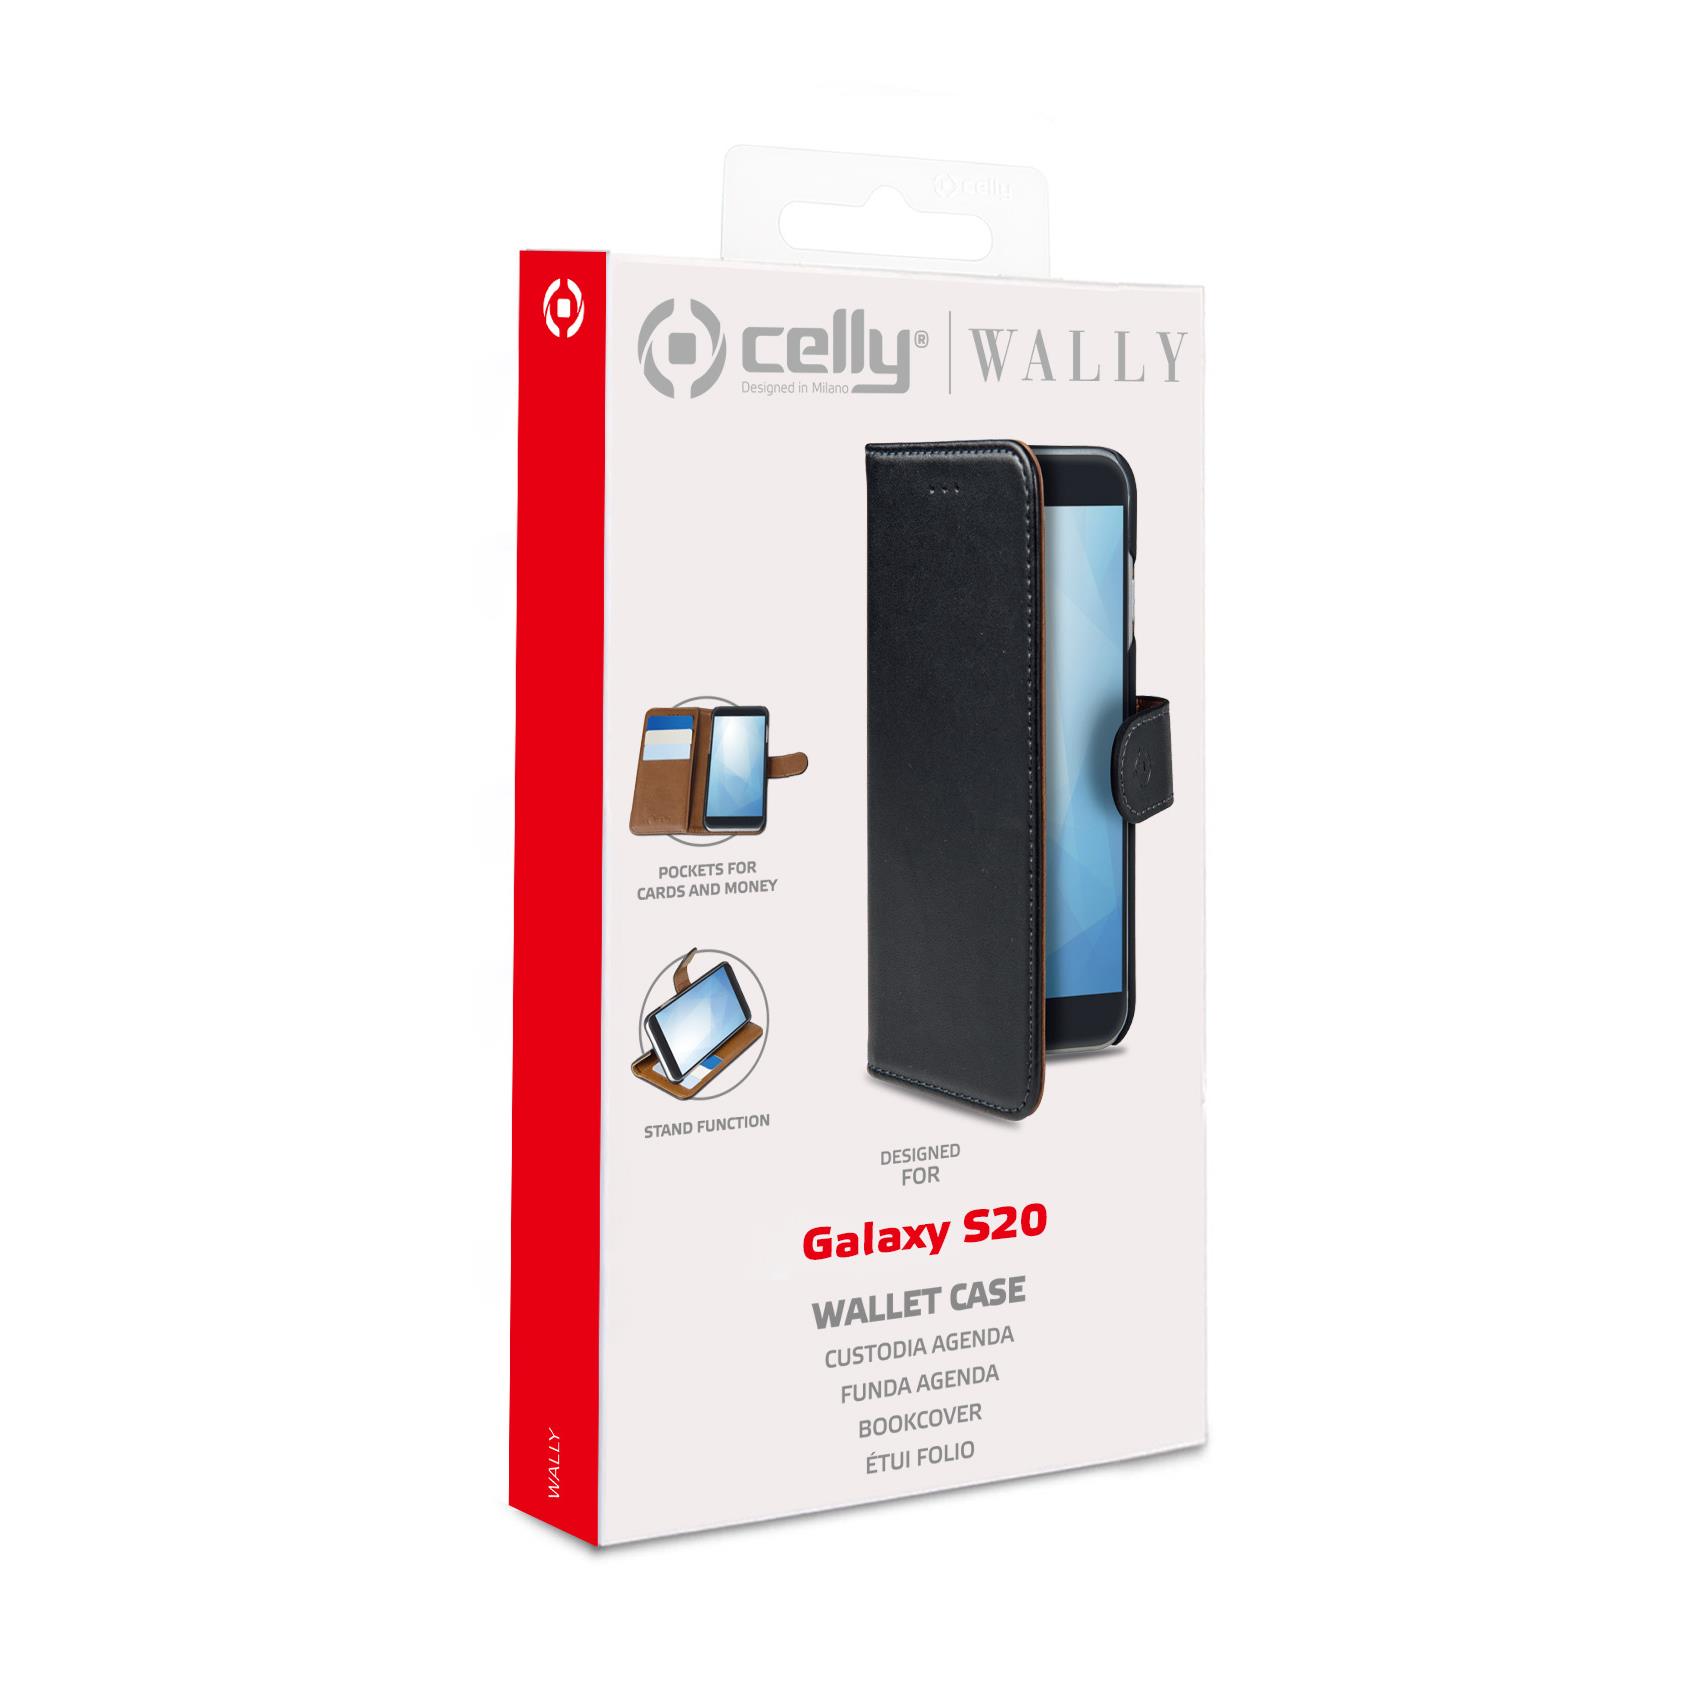 Wally Case Galaxy S20 Black Celly Wally992 8021735756514